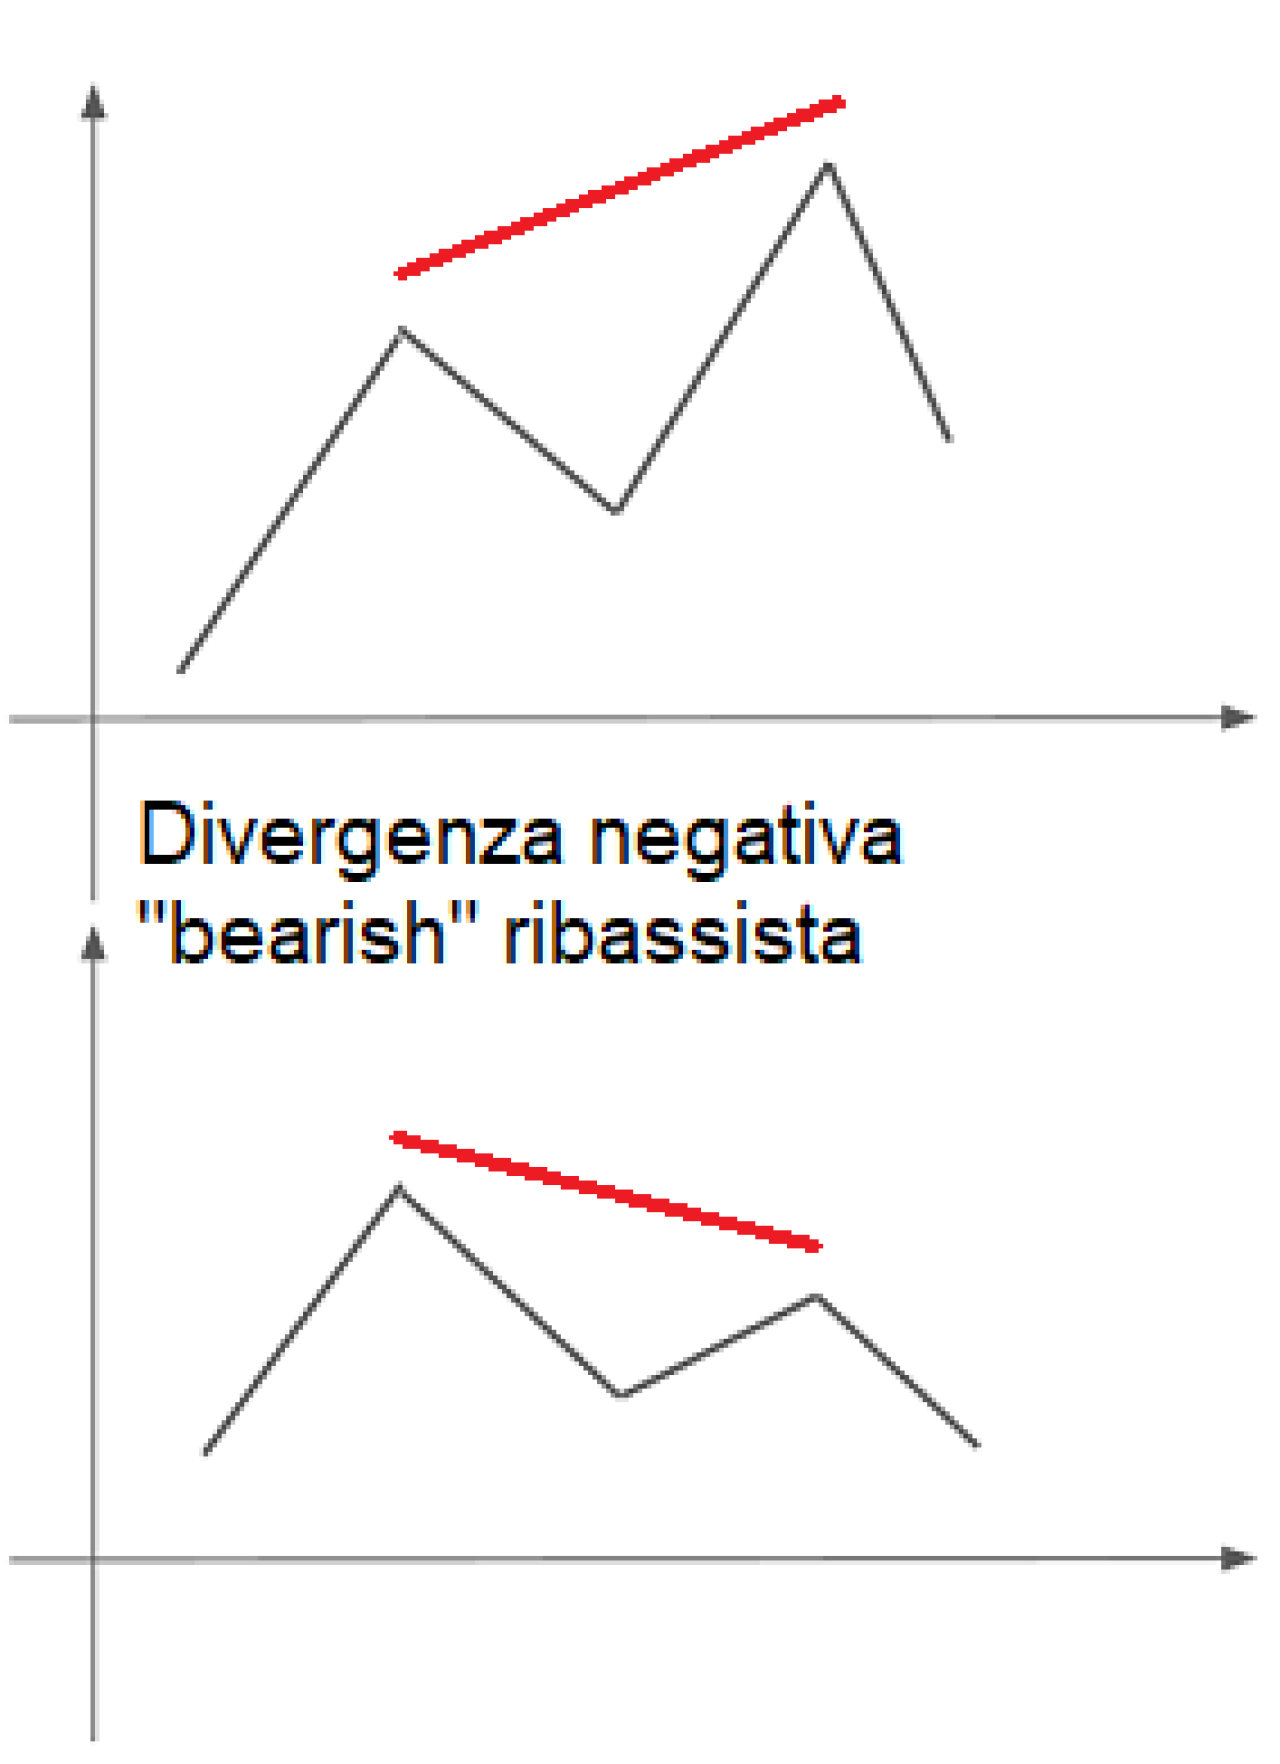 RSI divergenza negativa ribassista bearish.